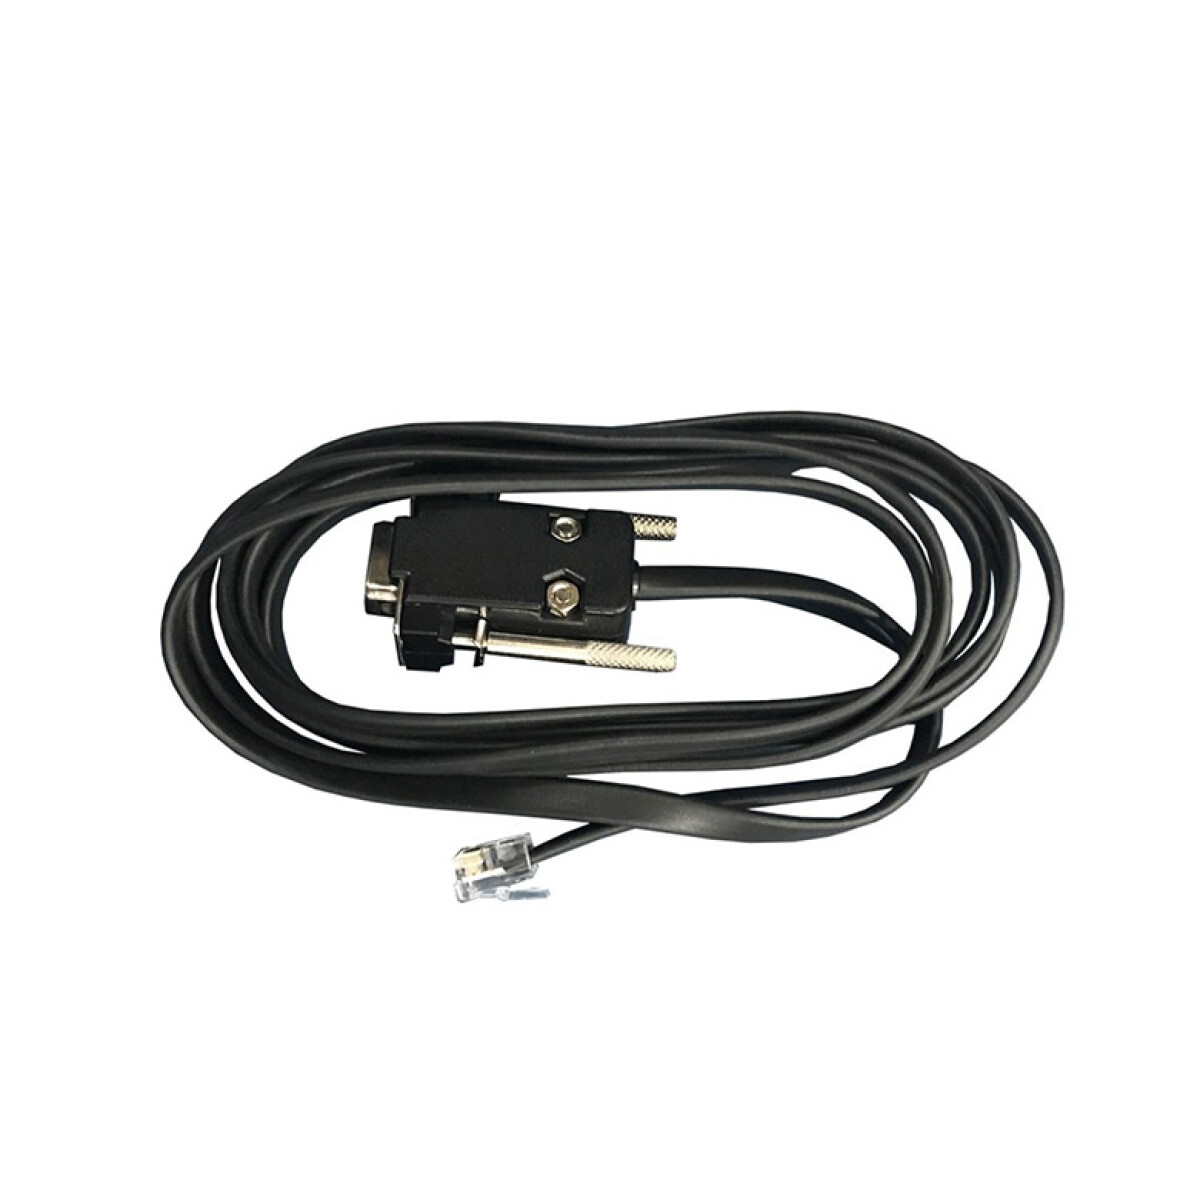 Cable 3 mts. p/display remoto HMI, CFW11/700 - WE9702 